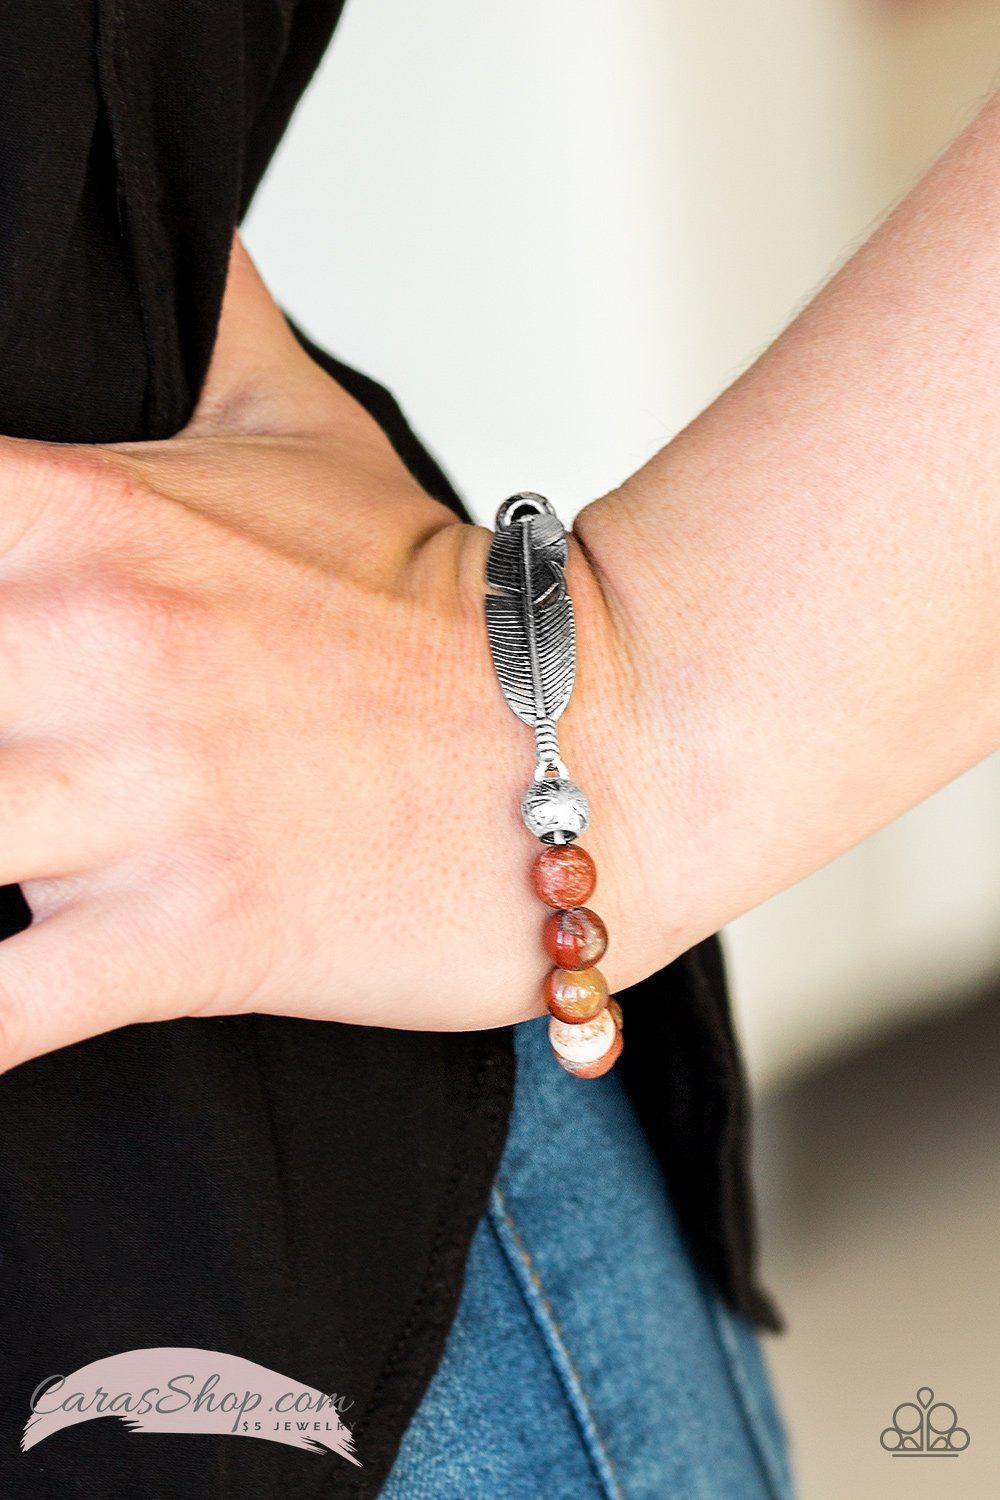 Soar High Brown Stone Stretch Bracelet - Paparazzi Accessories-CarasShop.com - $5 Jewelry by Cara Jewels